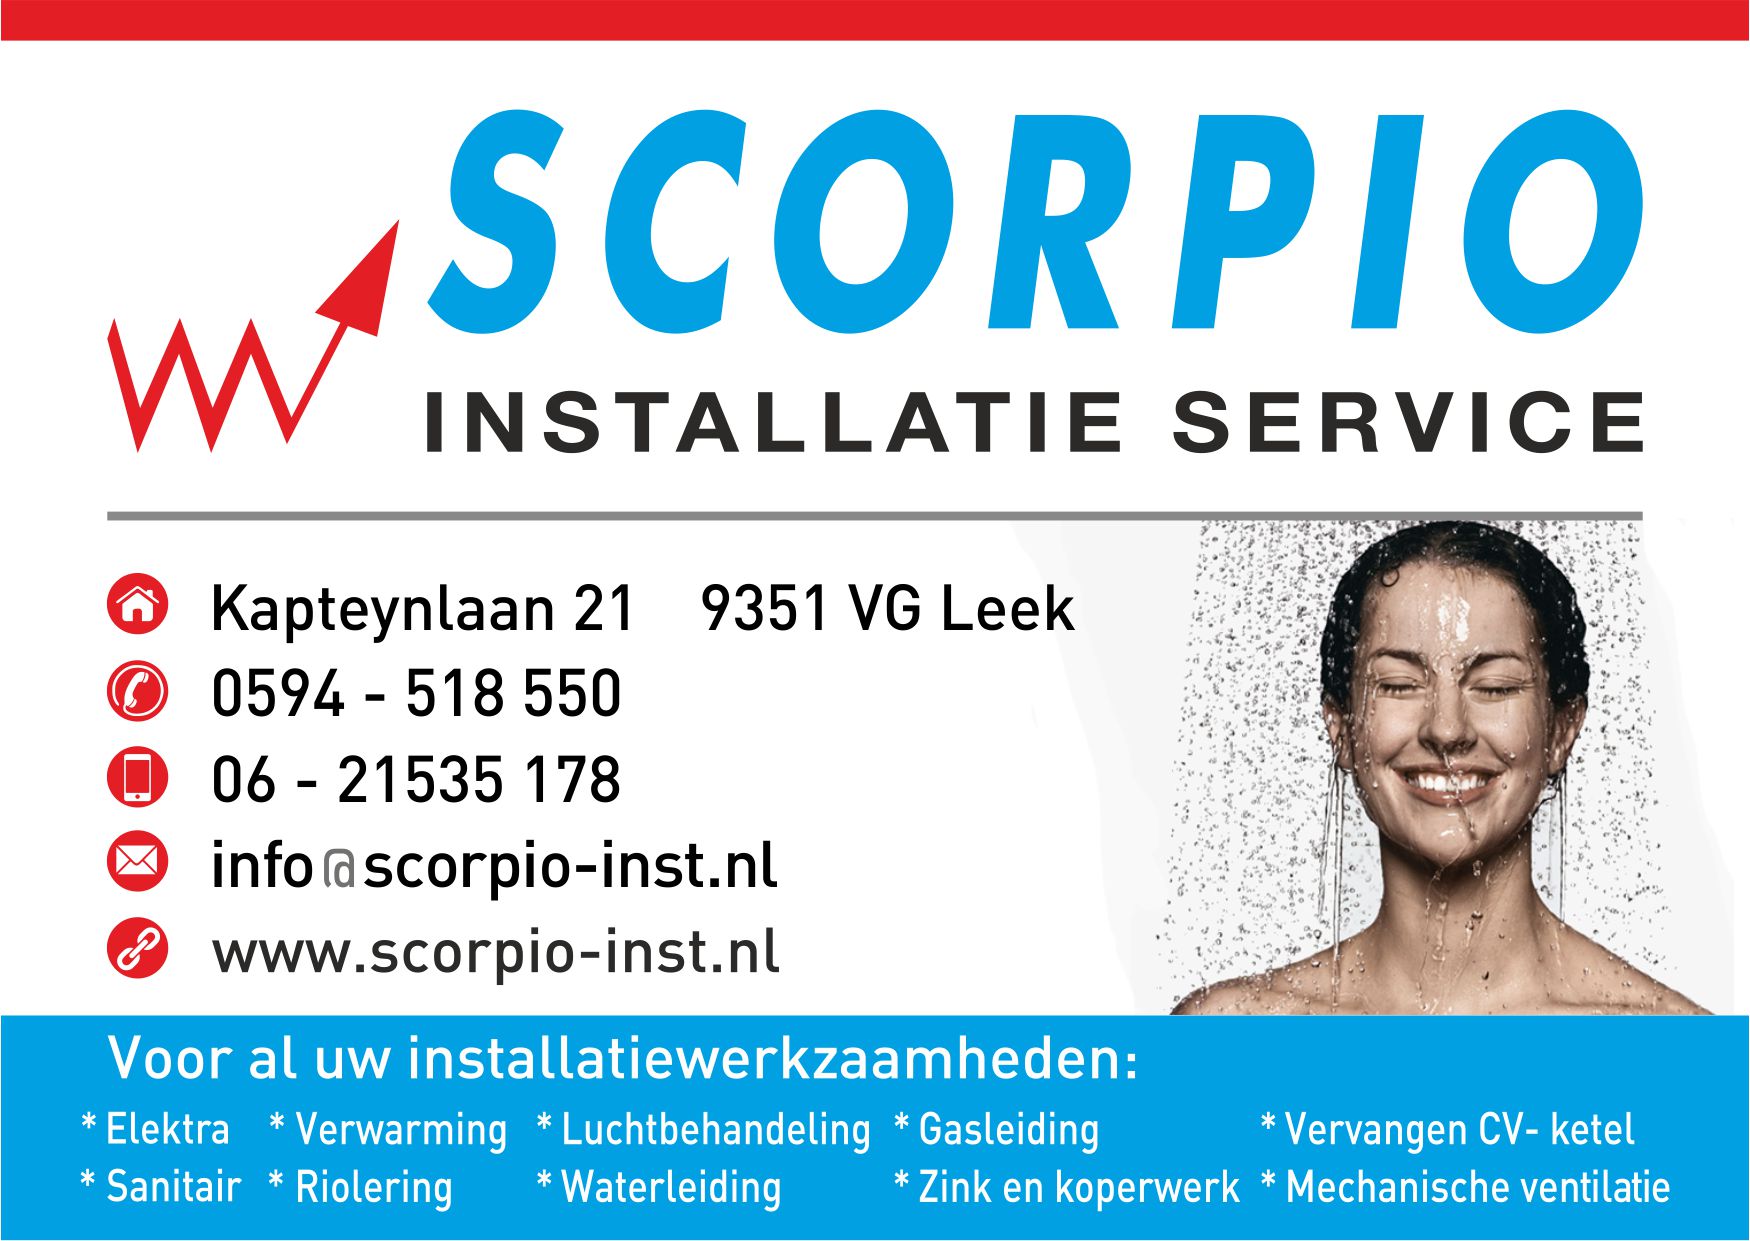 Scorpio Installatie Service